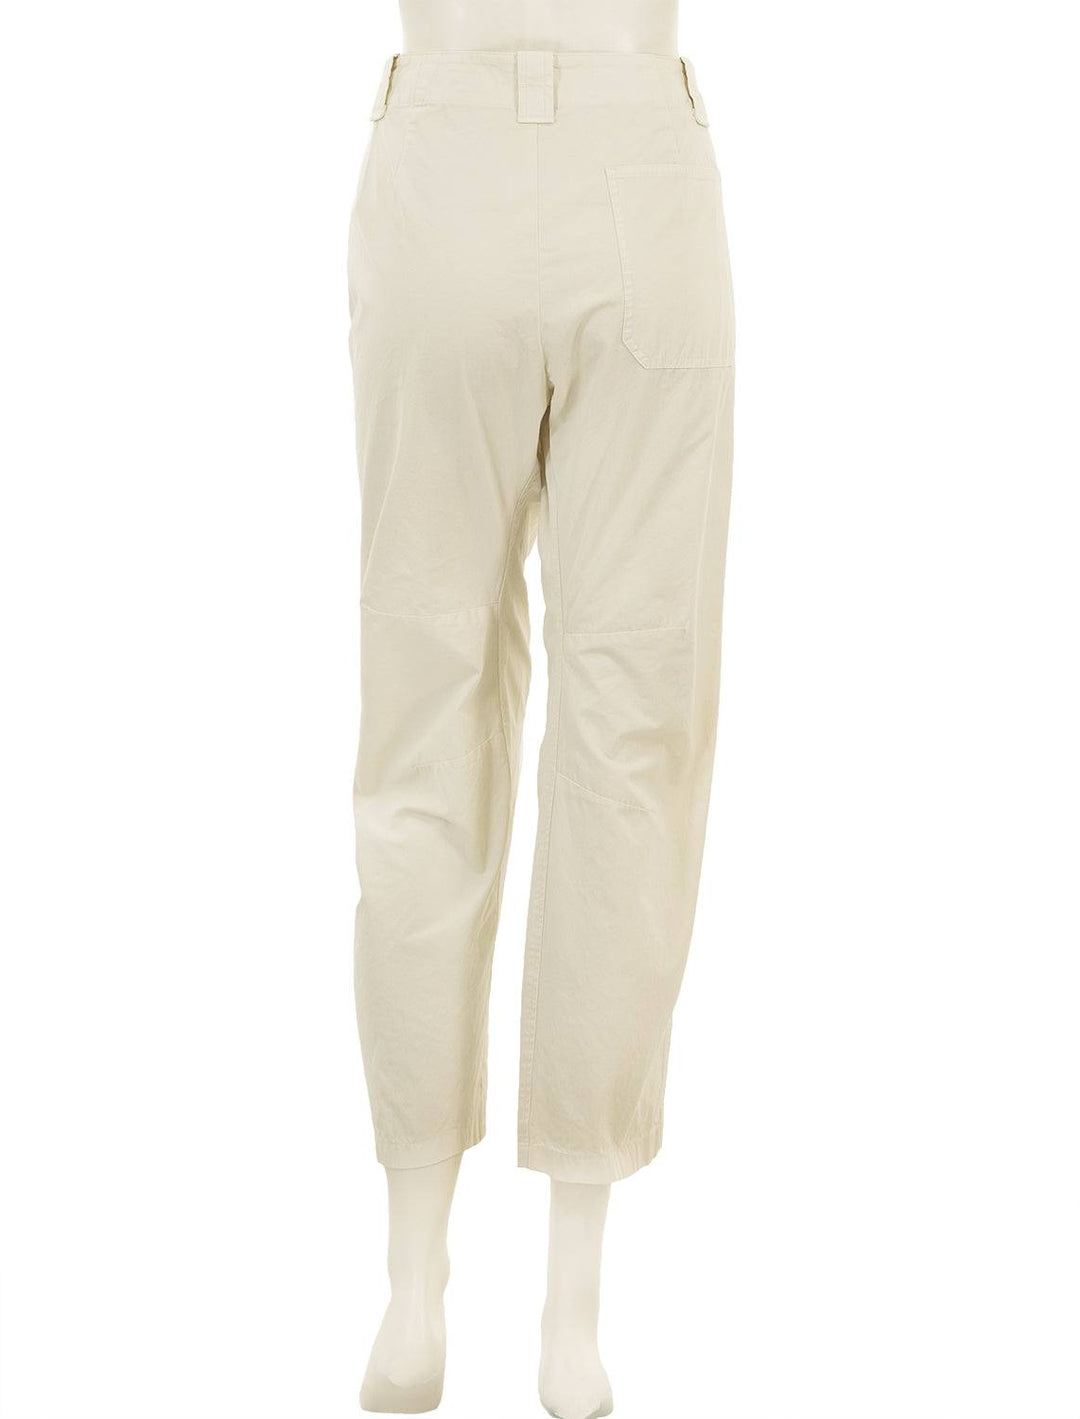 Back view of Rag & Bone's leyton workwear pant in ivory.